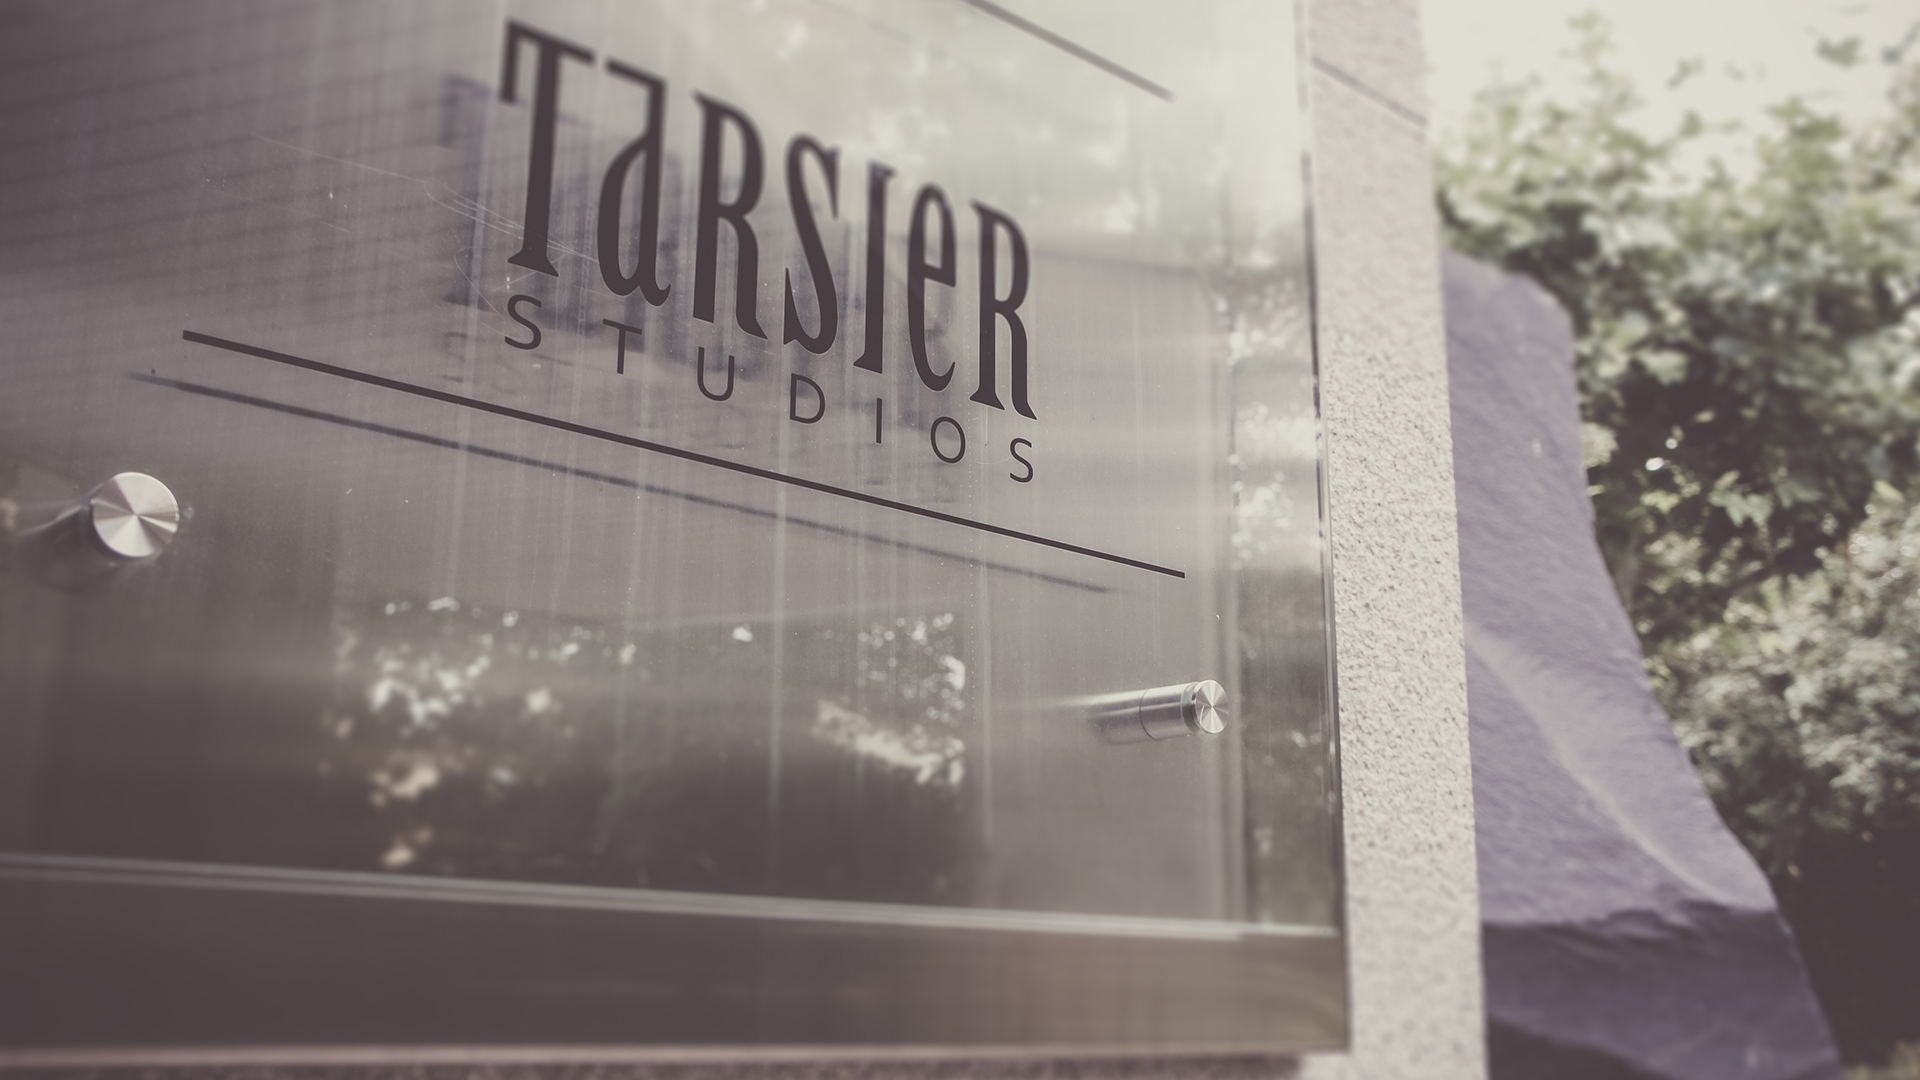 Tarsier studios steam фото 86